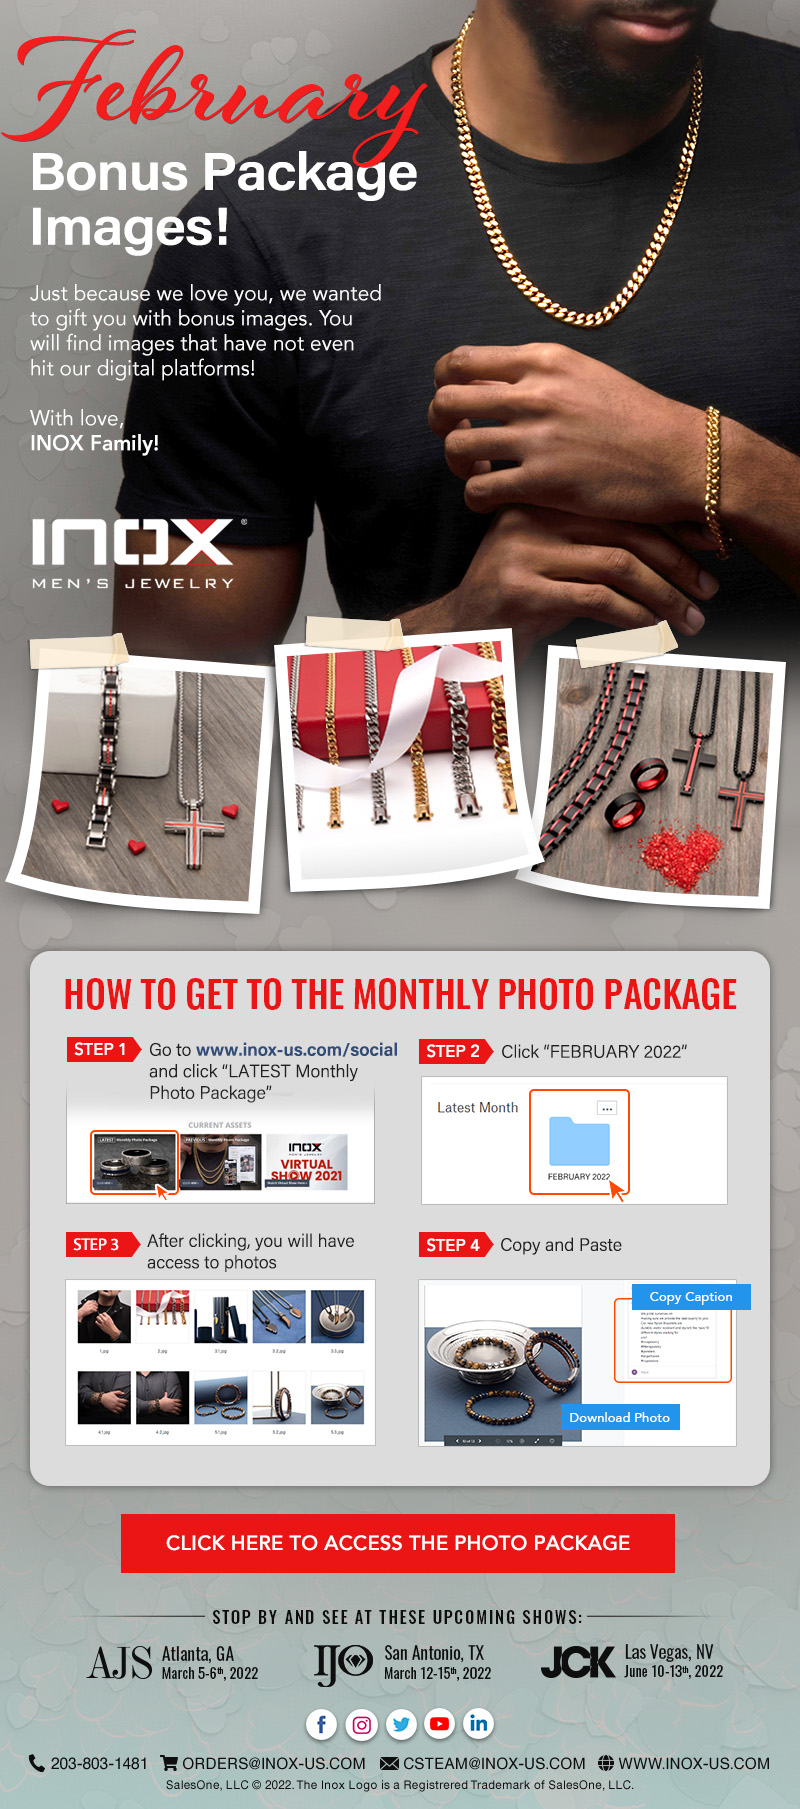 February Bonus Package Images from INOX.